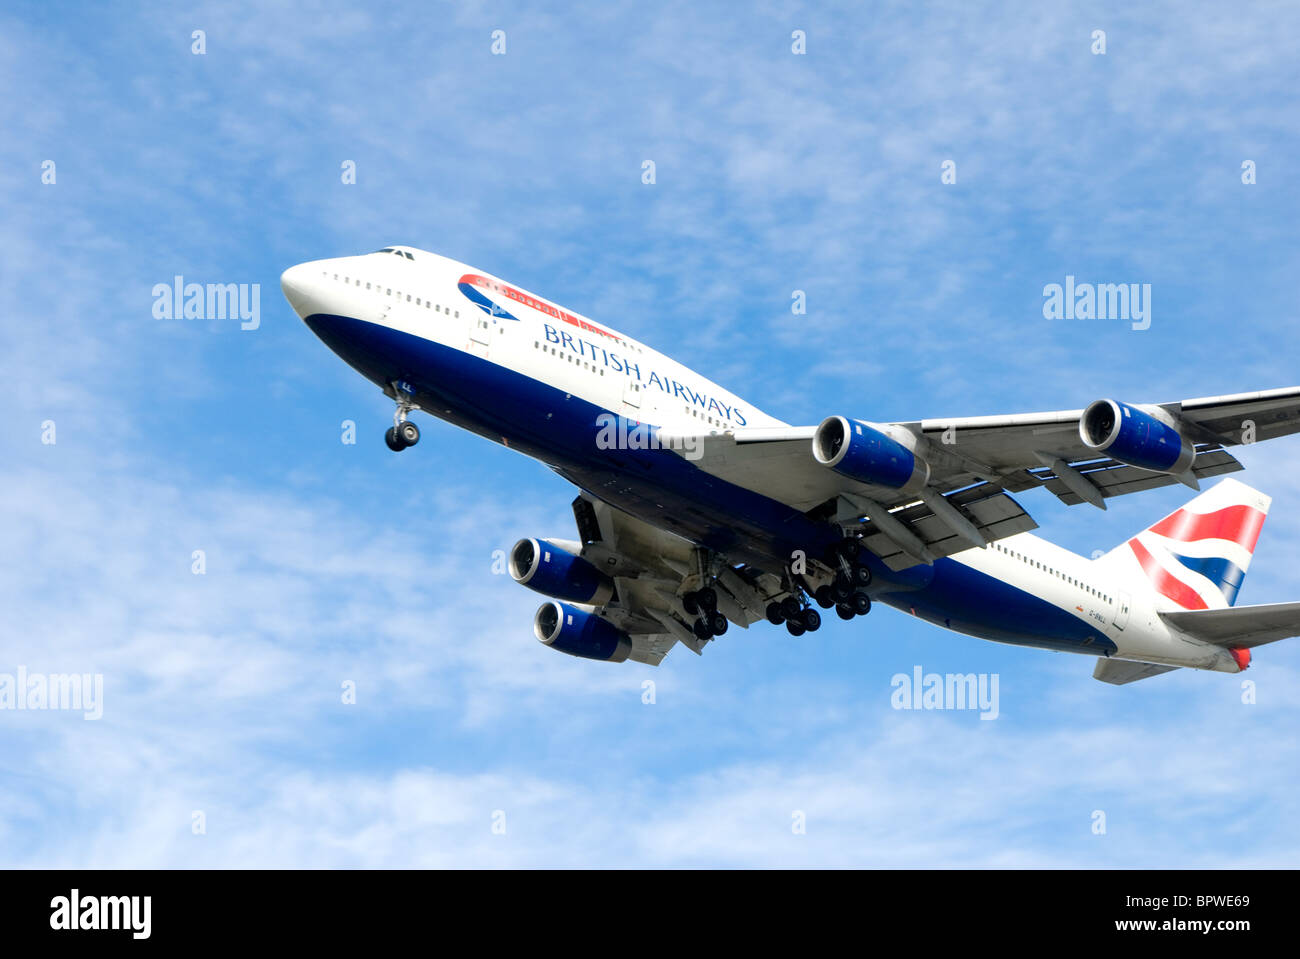 British Airways passenger jet plane flying against blue sky Stock Photo